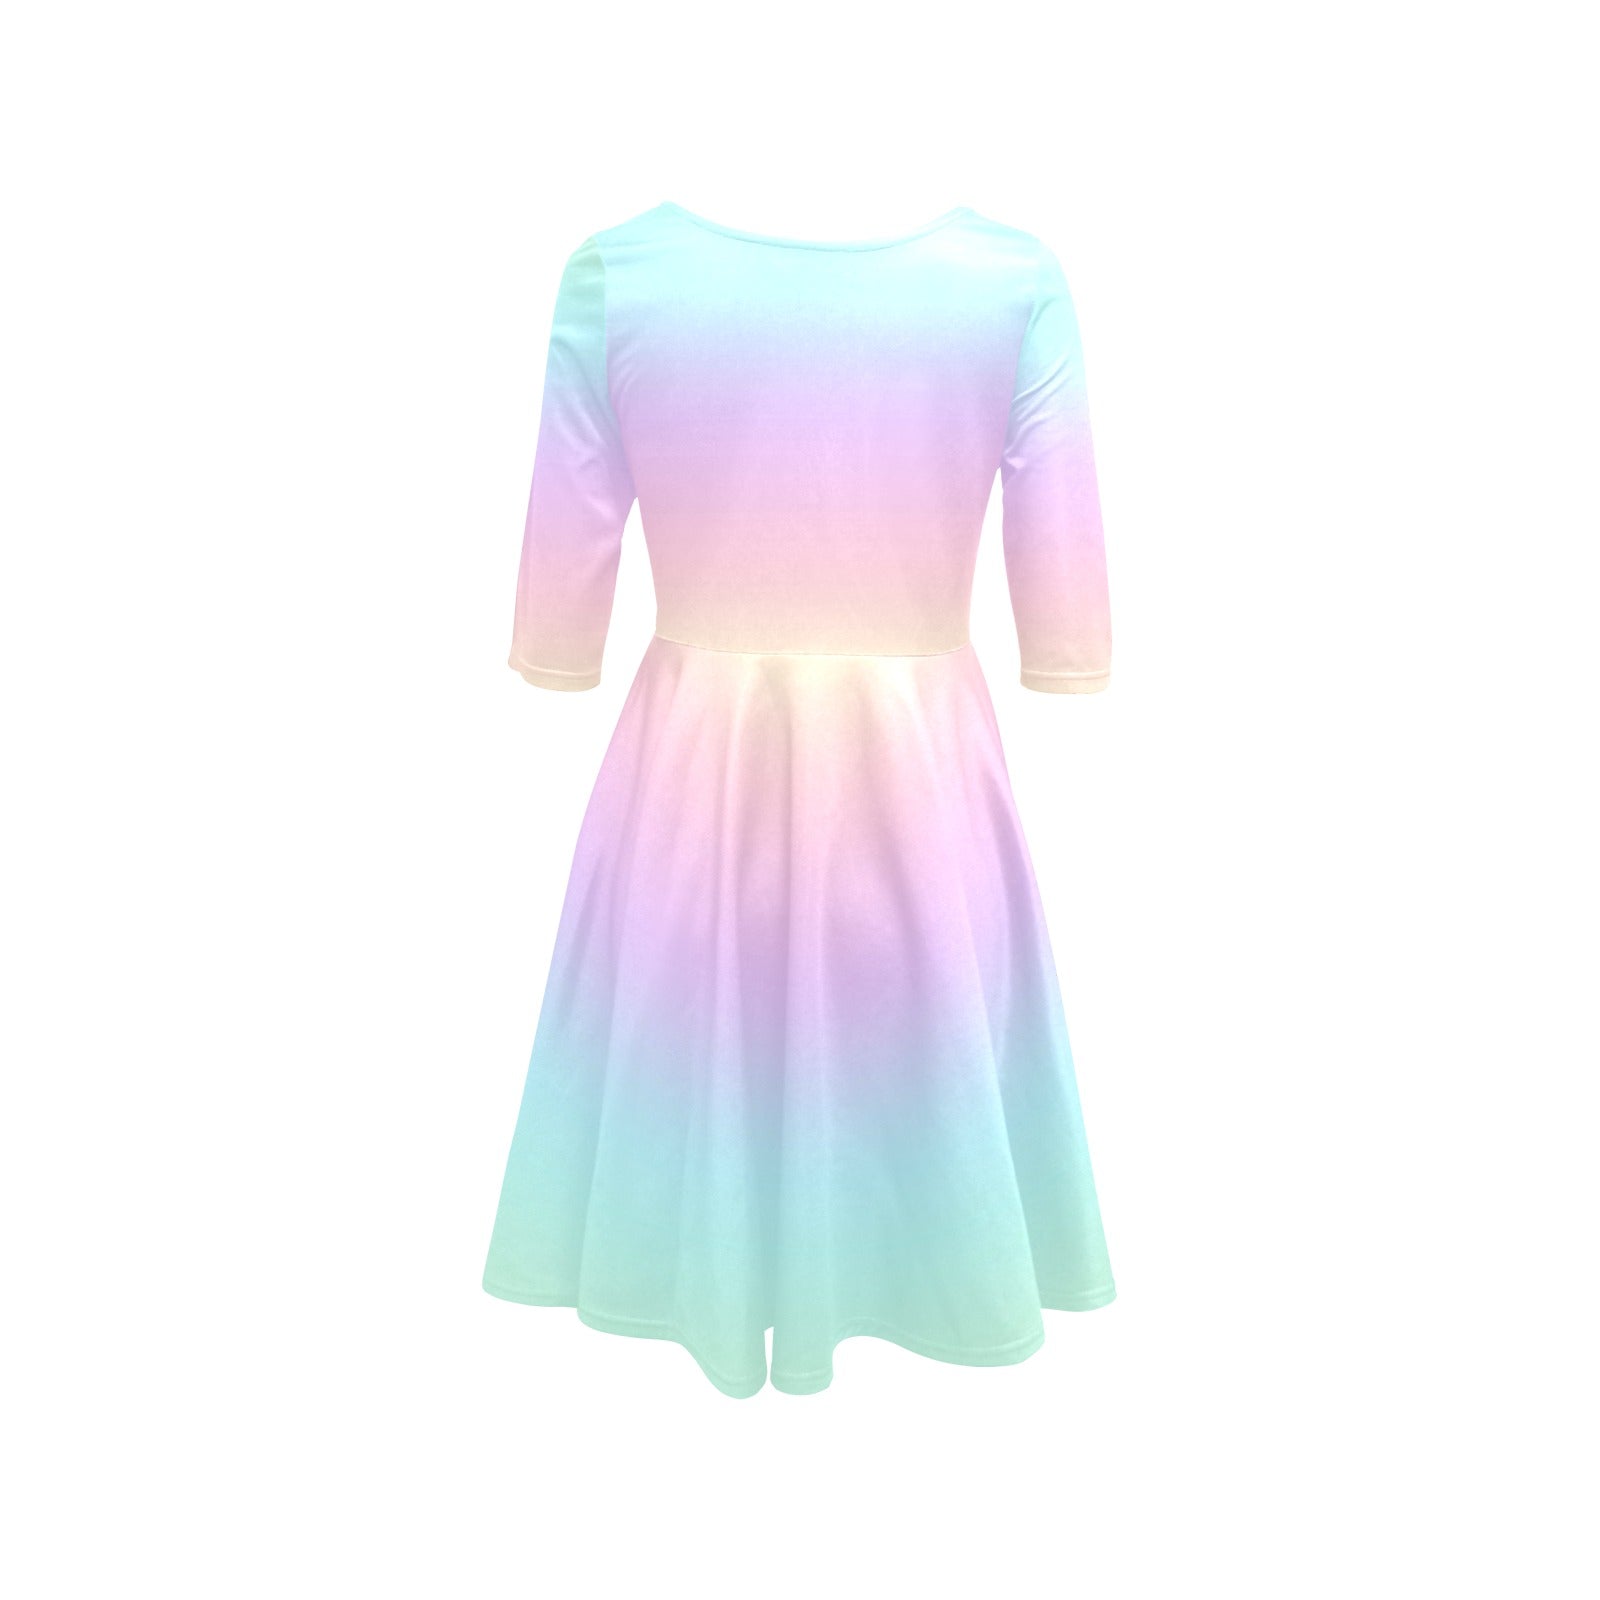 Fairy dress pastel rainbow design